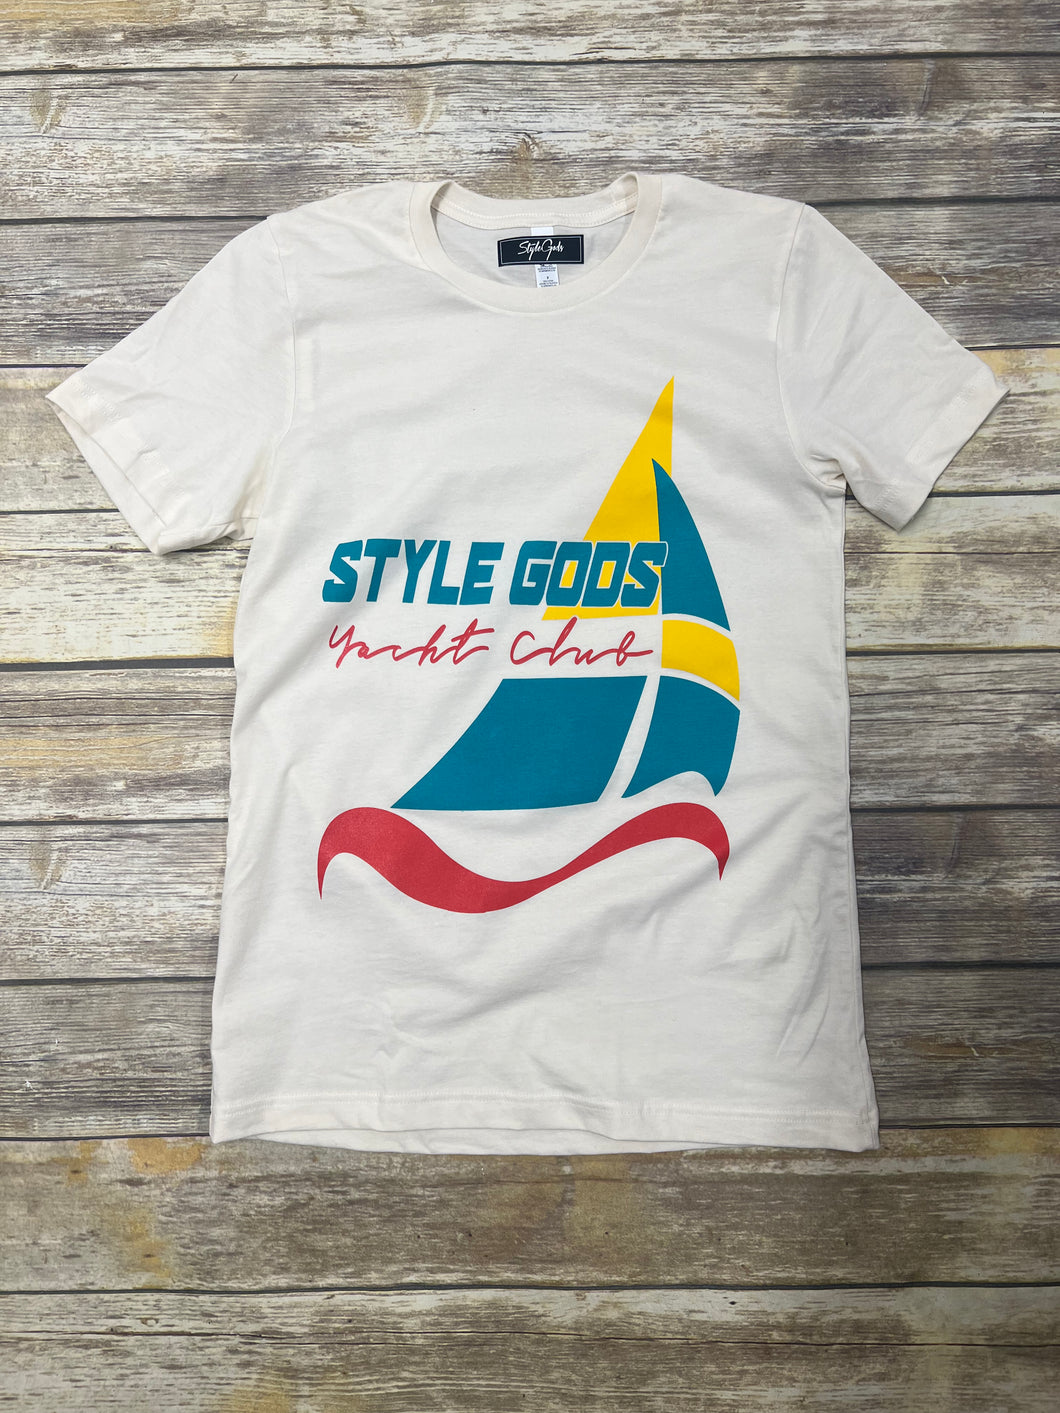 StyleGods Yacht Club - Tan/Teal/Gold/Red